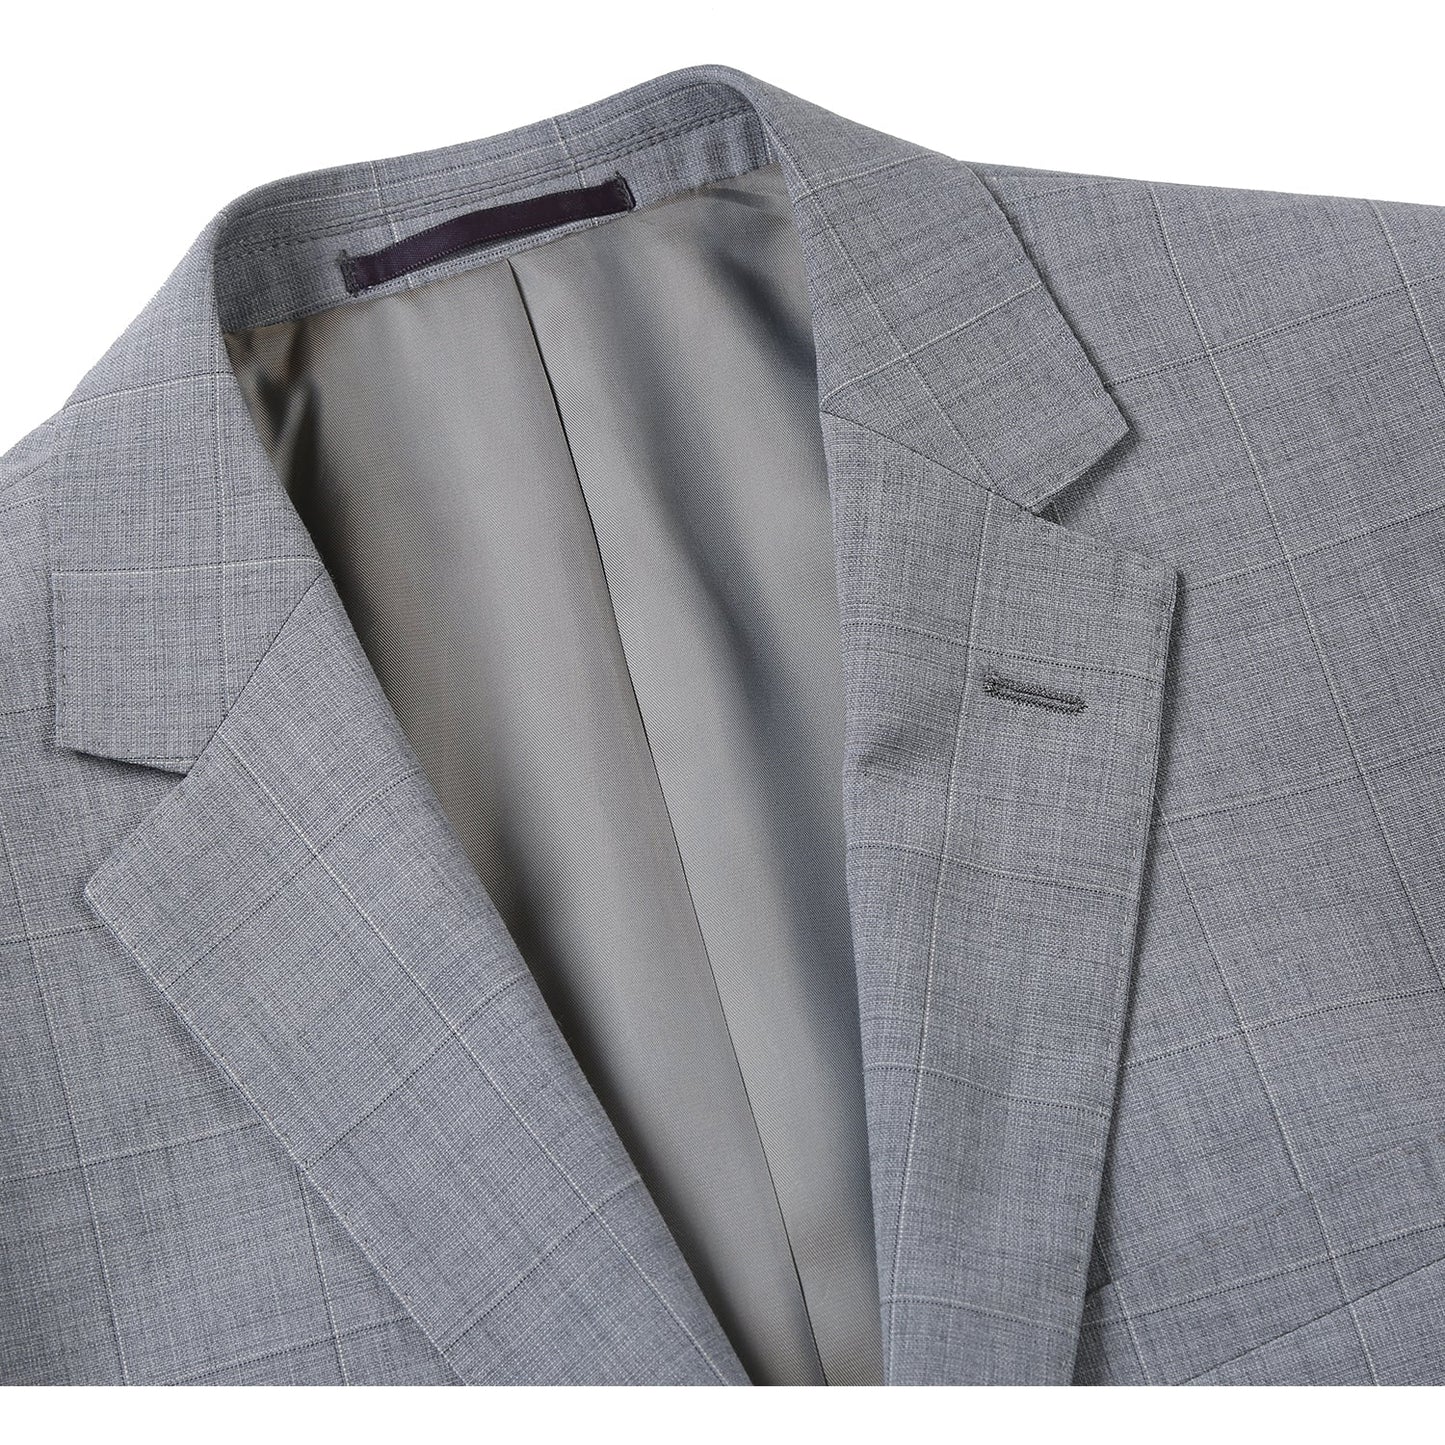 564-1 Men's Classic Fit Wool Blend Light Grey Windowpane Suit